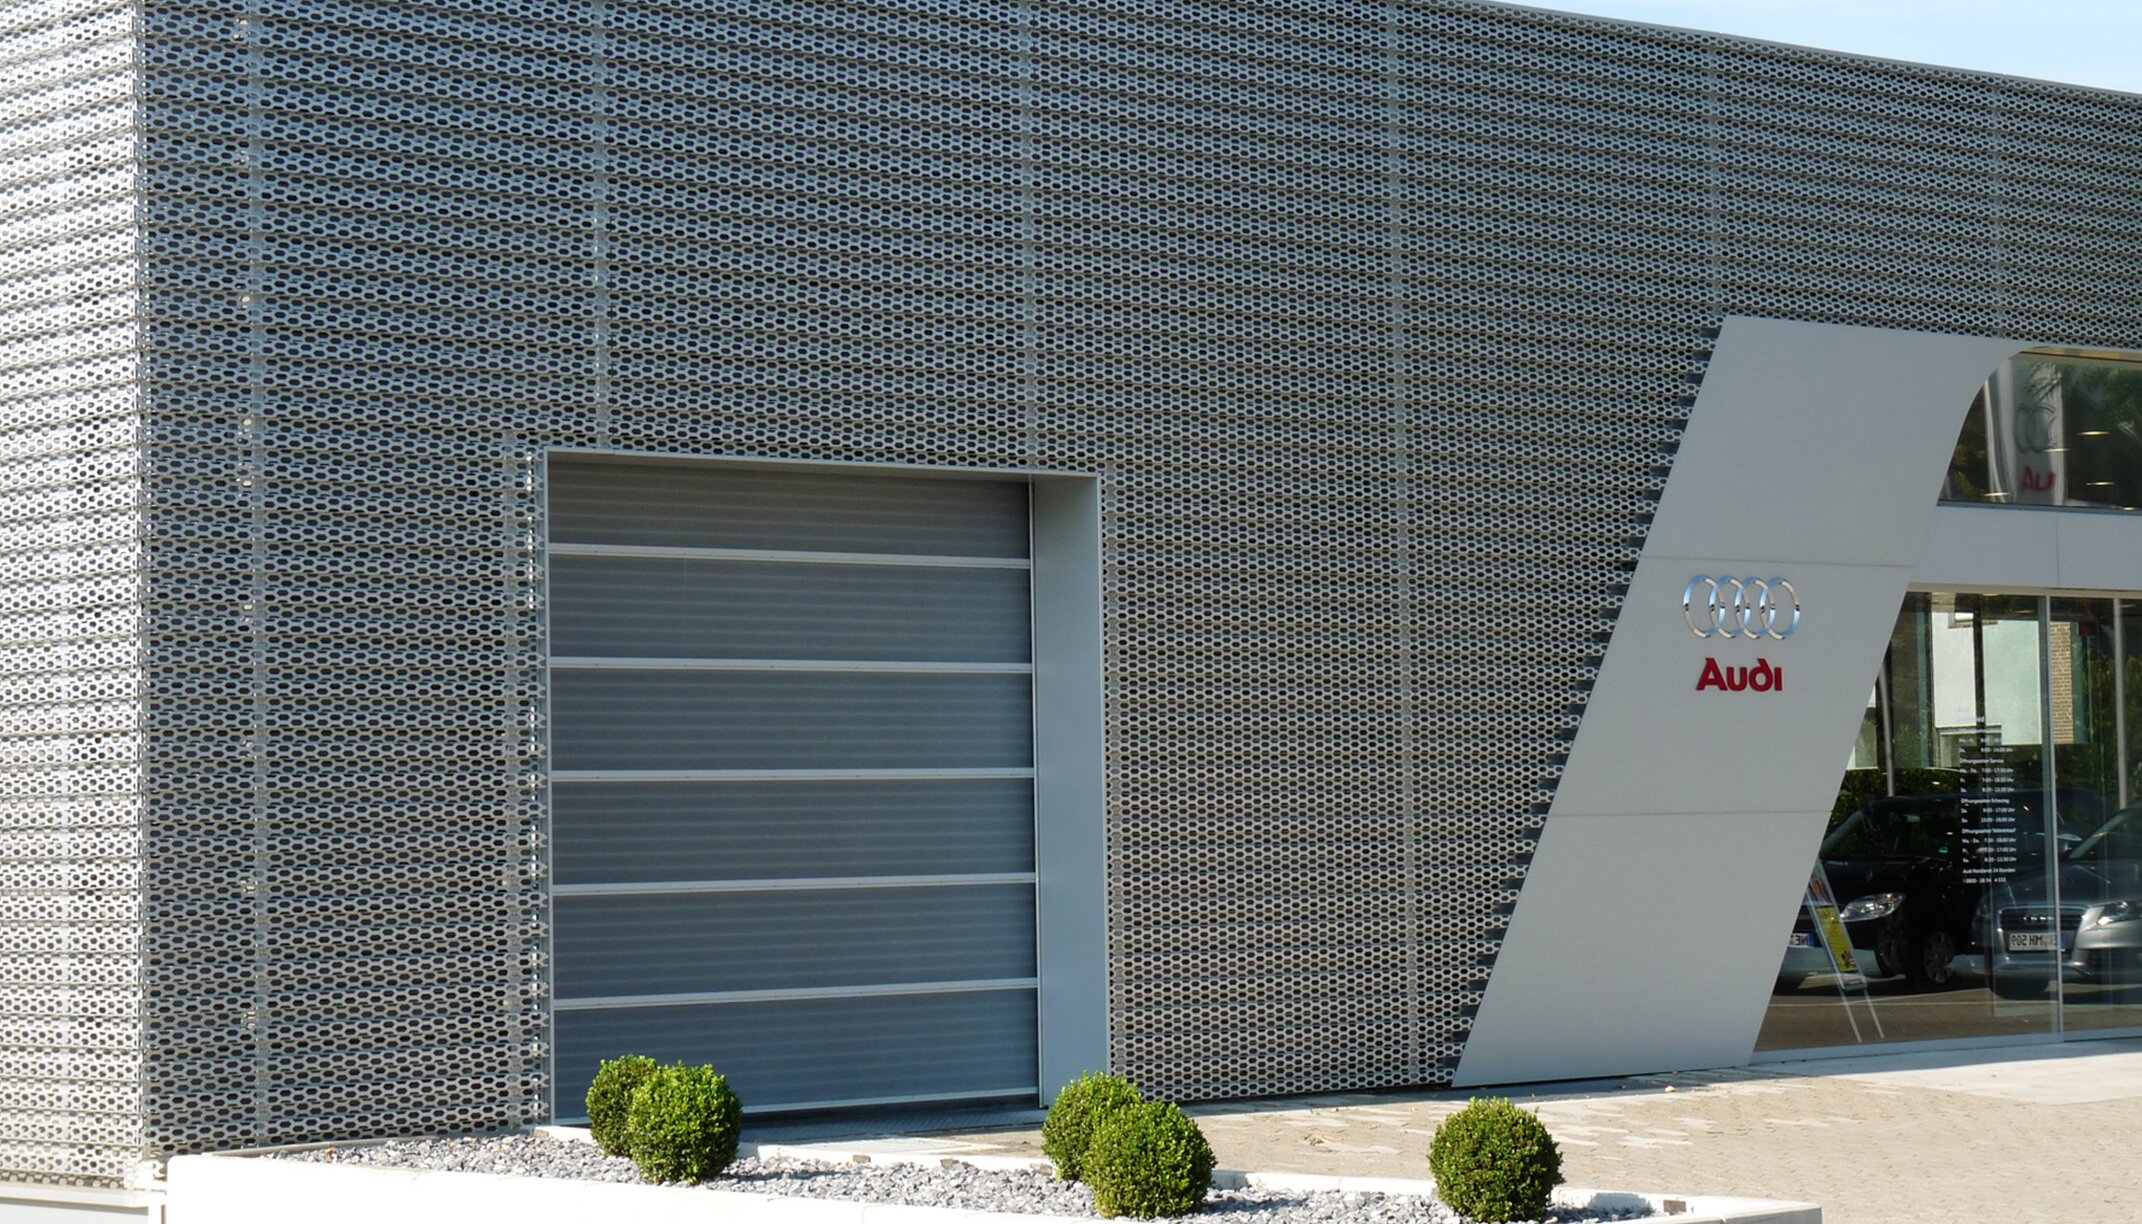 Detail view "Audizentrum"; ambitious individual facade